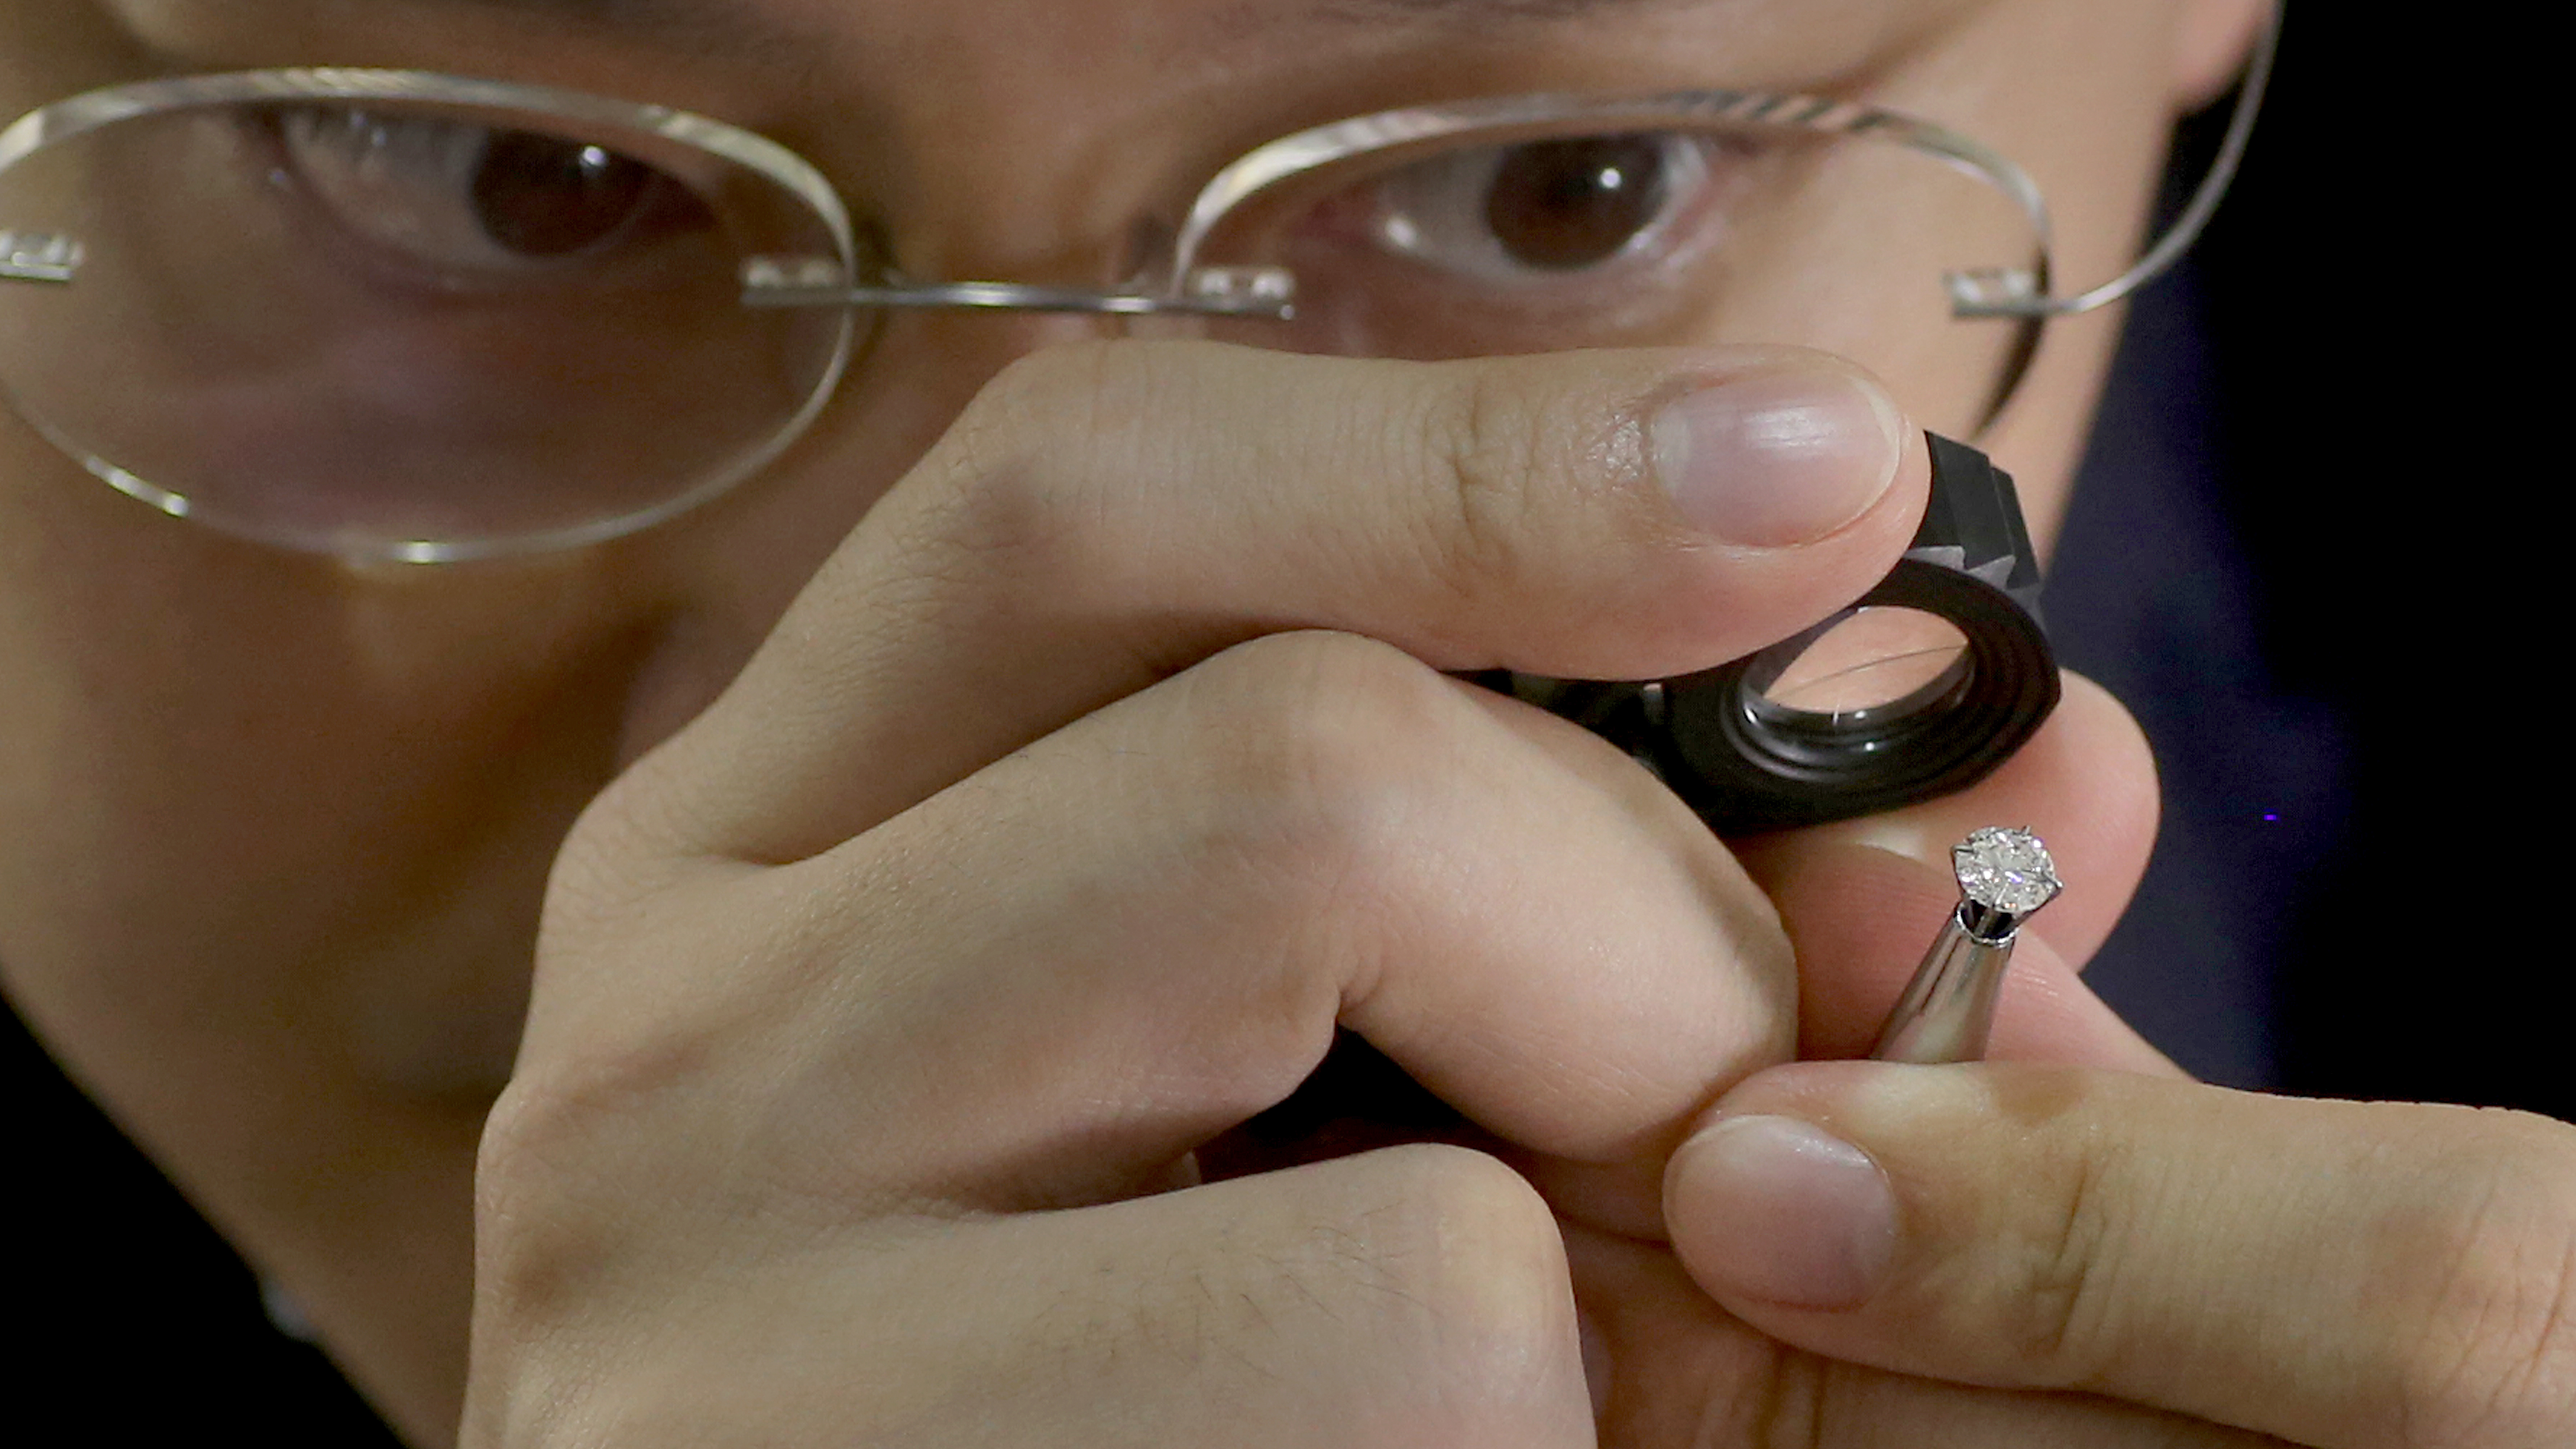 40x Magnifying Glasses, Led/uv Illuminated Jewelry Loop Pocket Folding Magnifying  Glass For Close Work